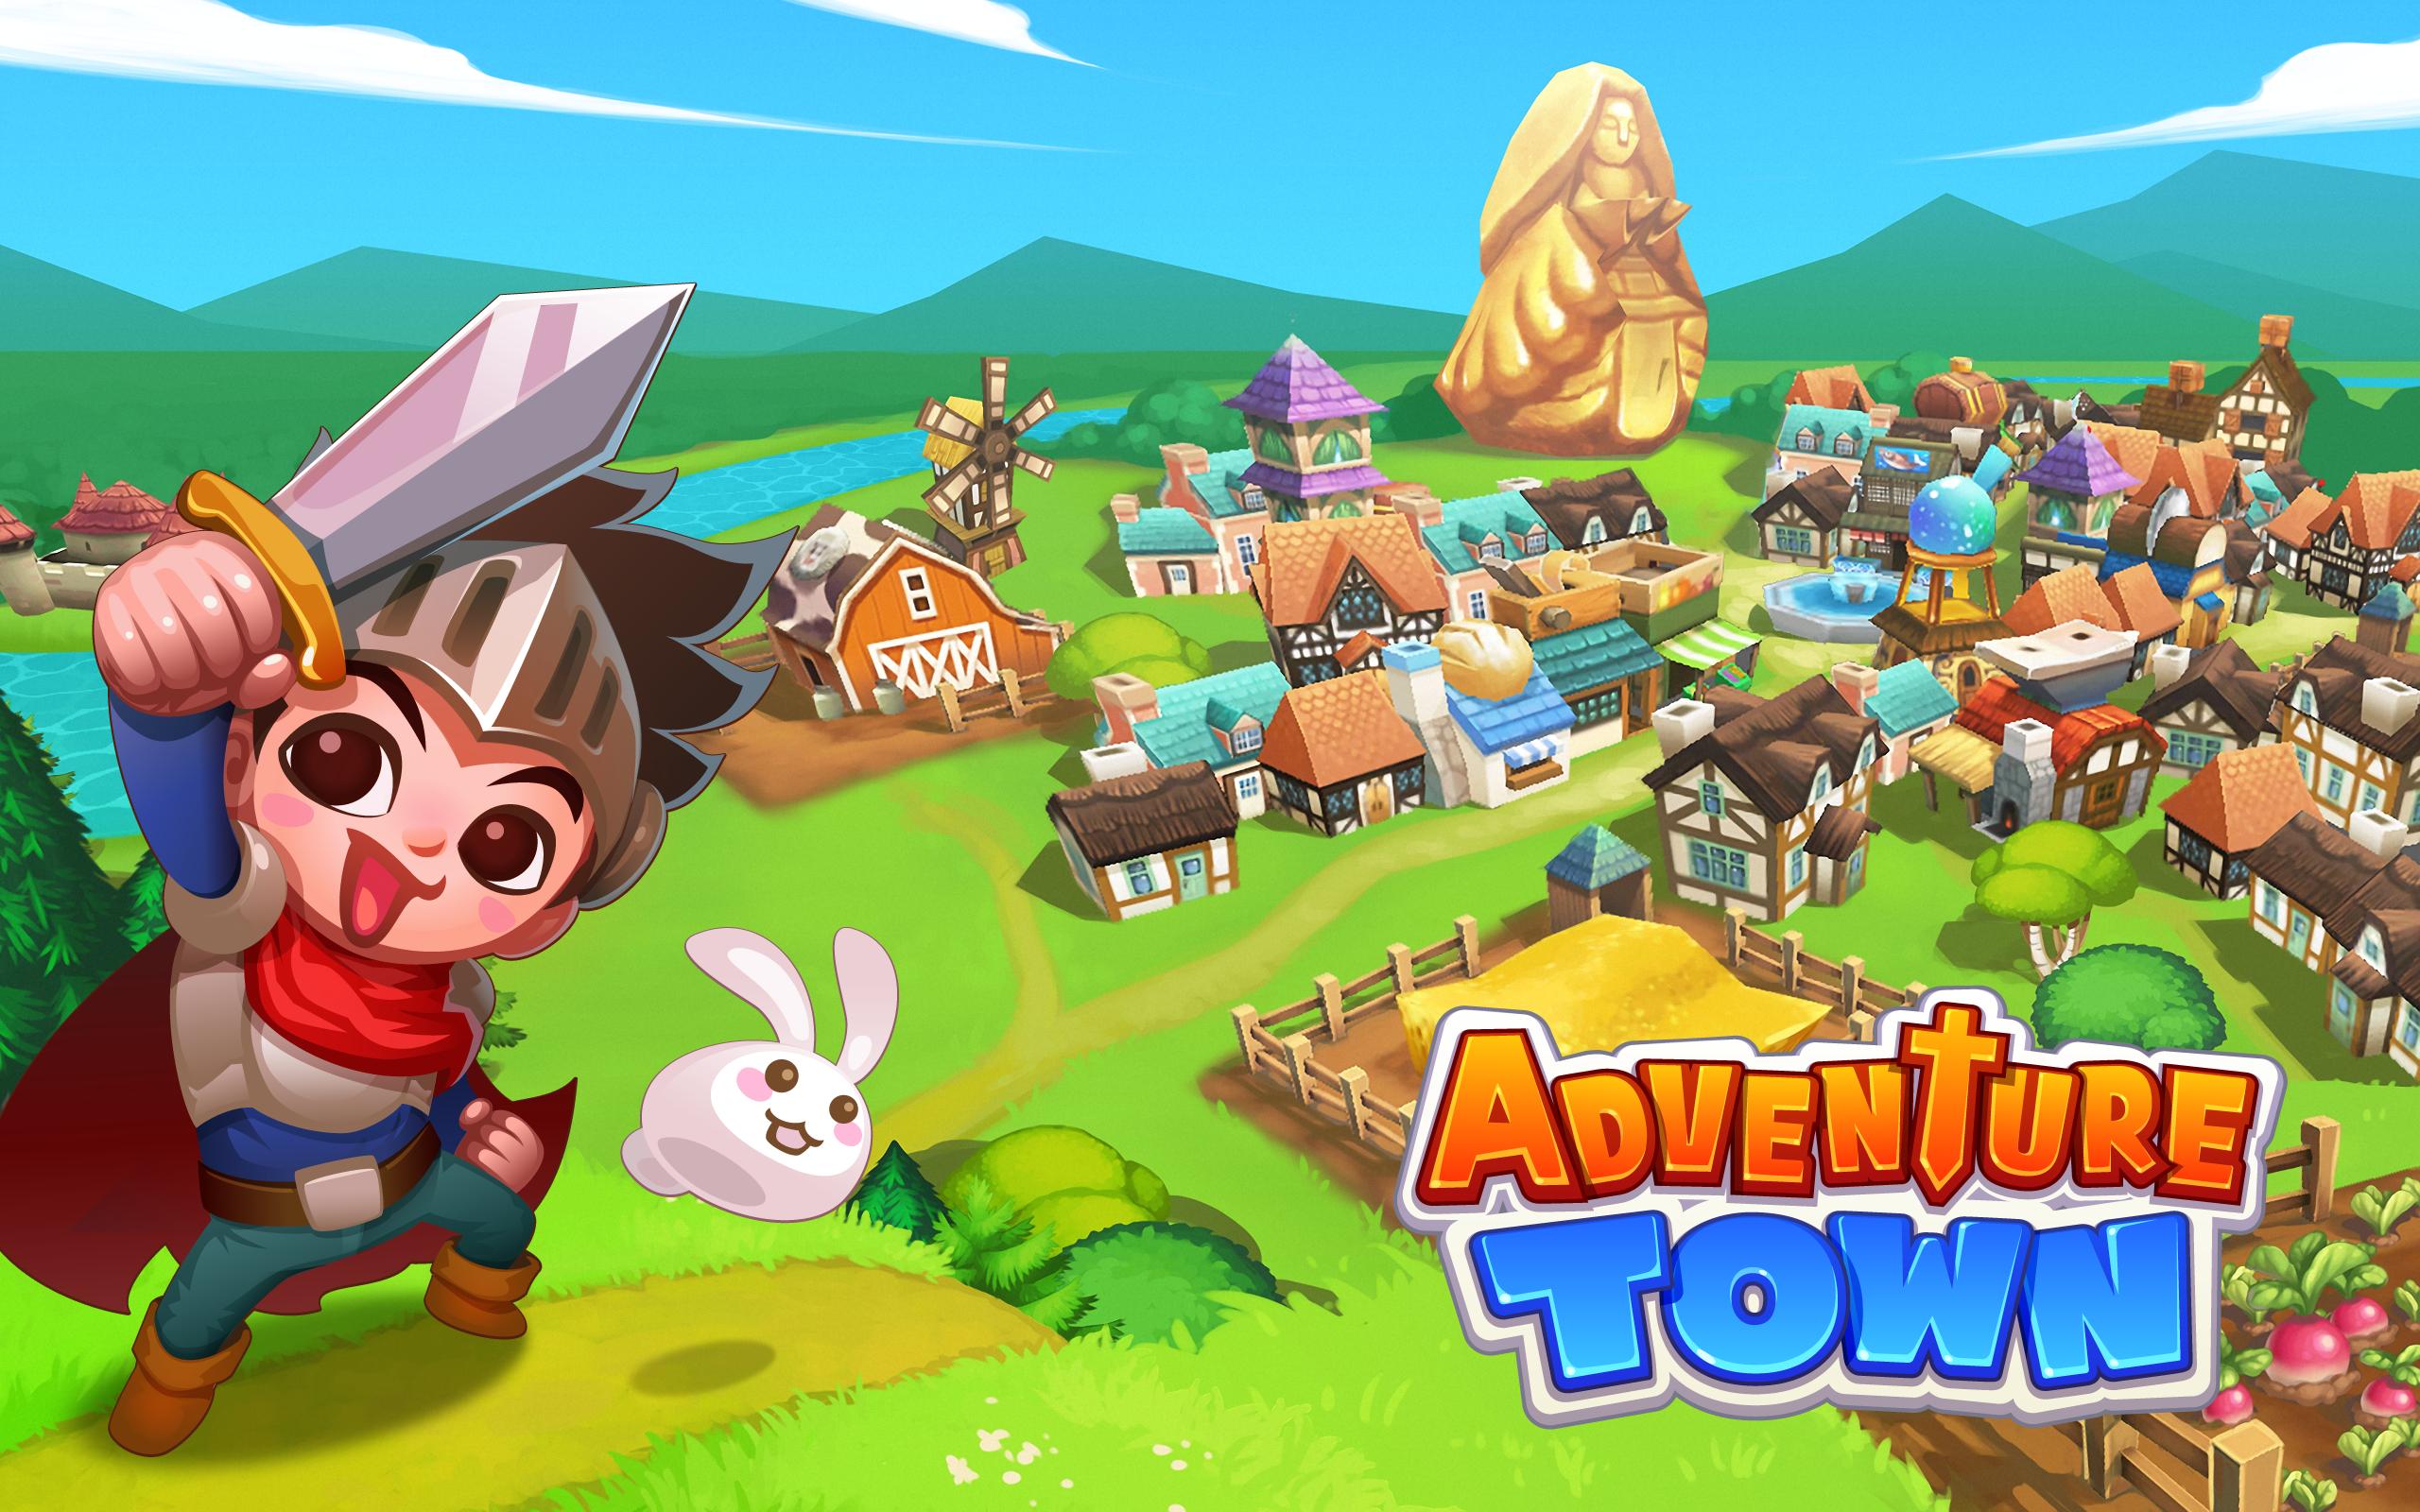 Adventure town 2. Игры и приключения. Игра на андроид Adventure. Адвенчер игра. Town игра на андроид.